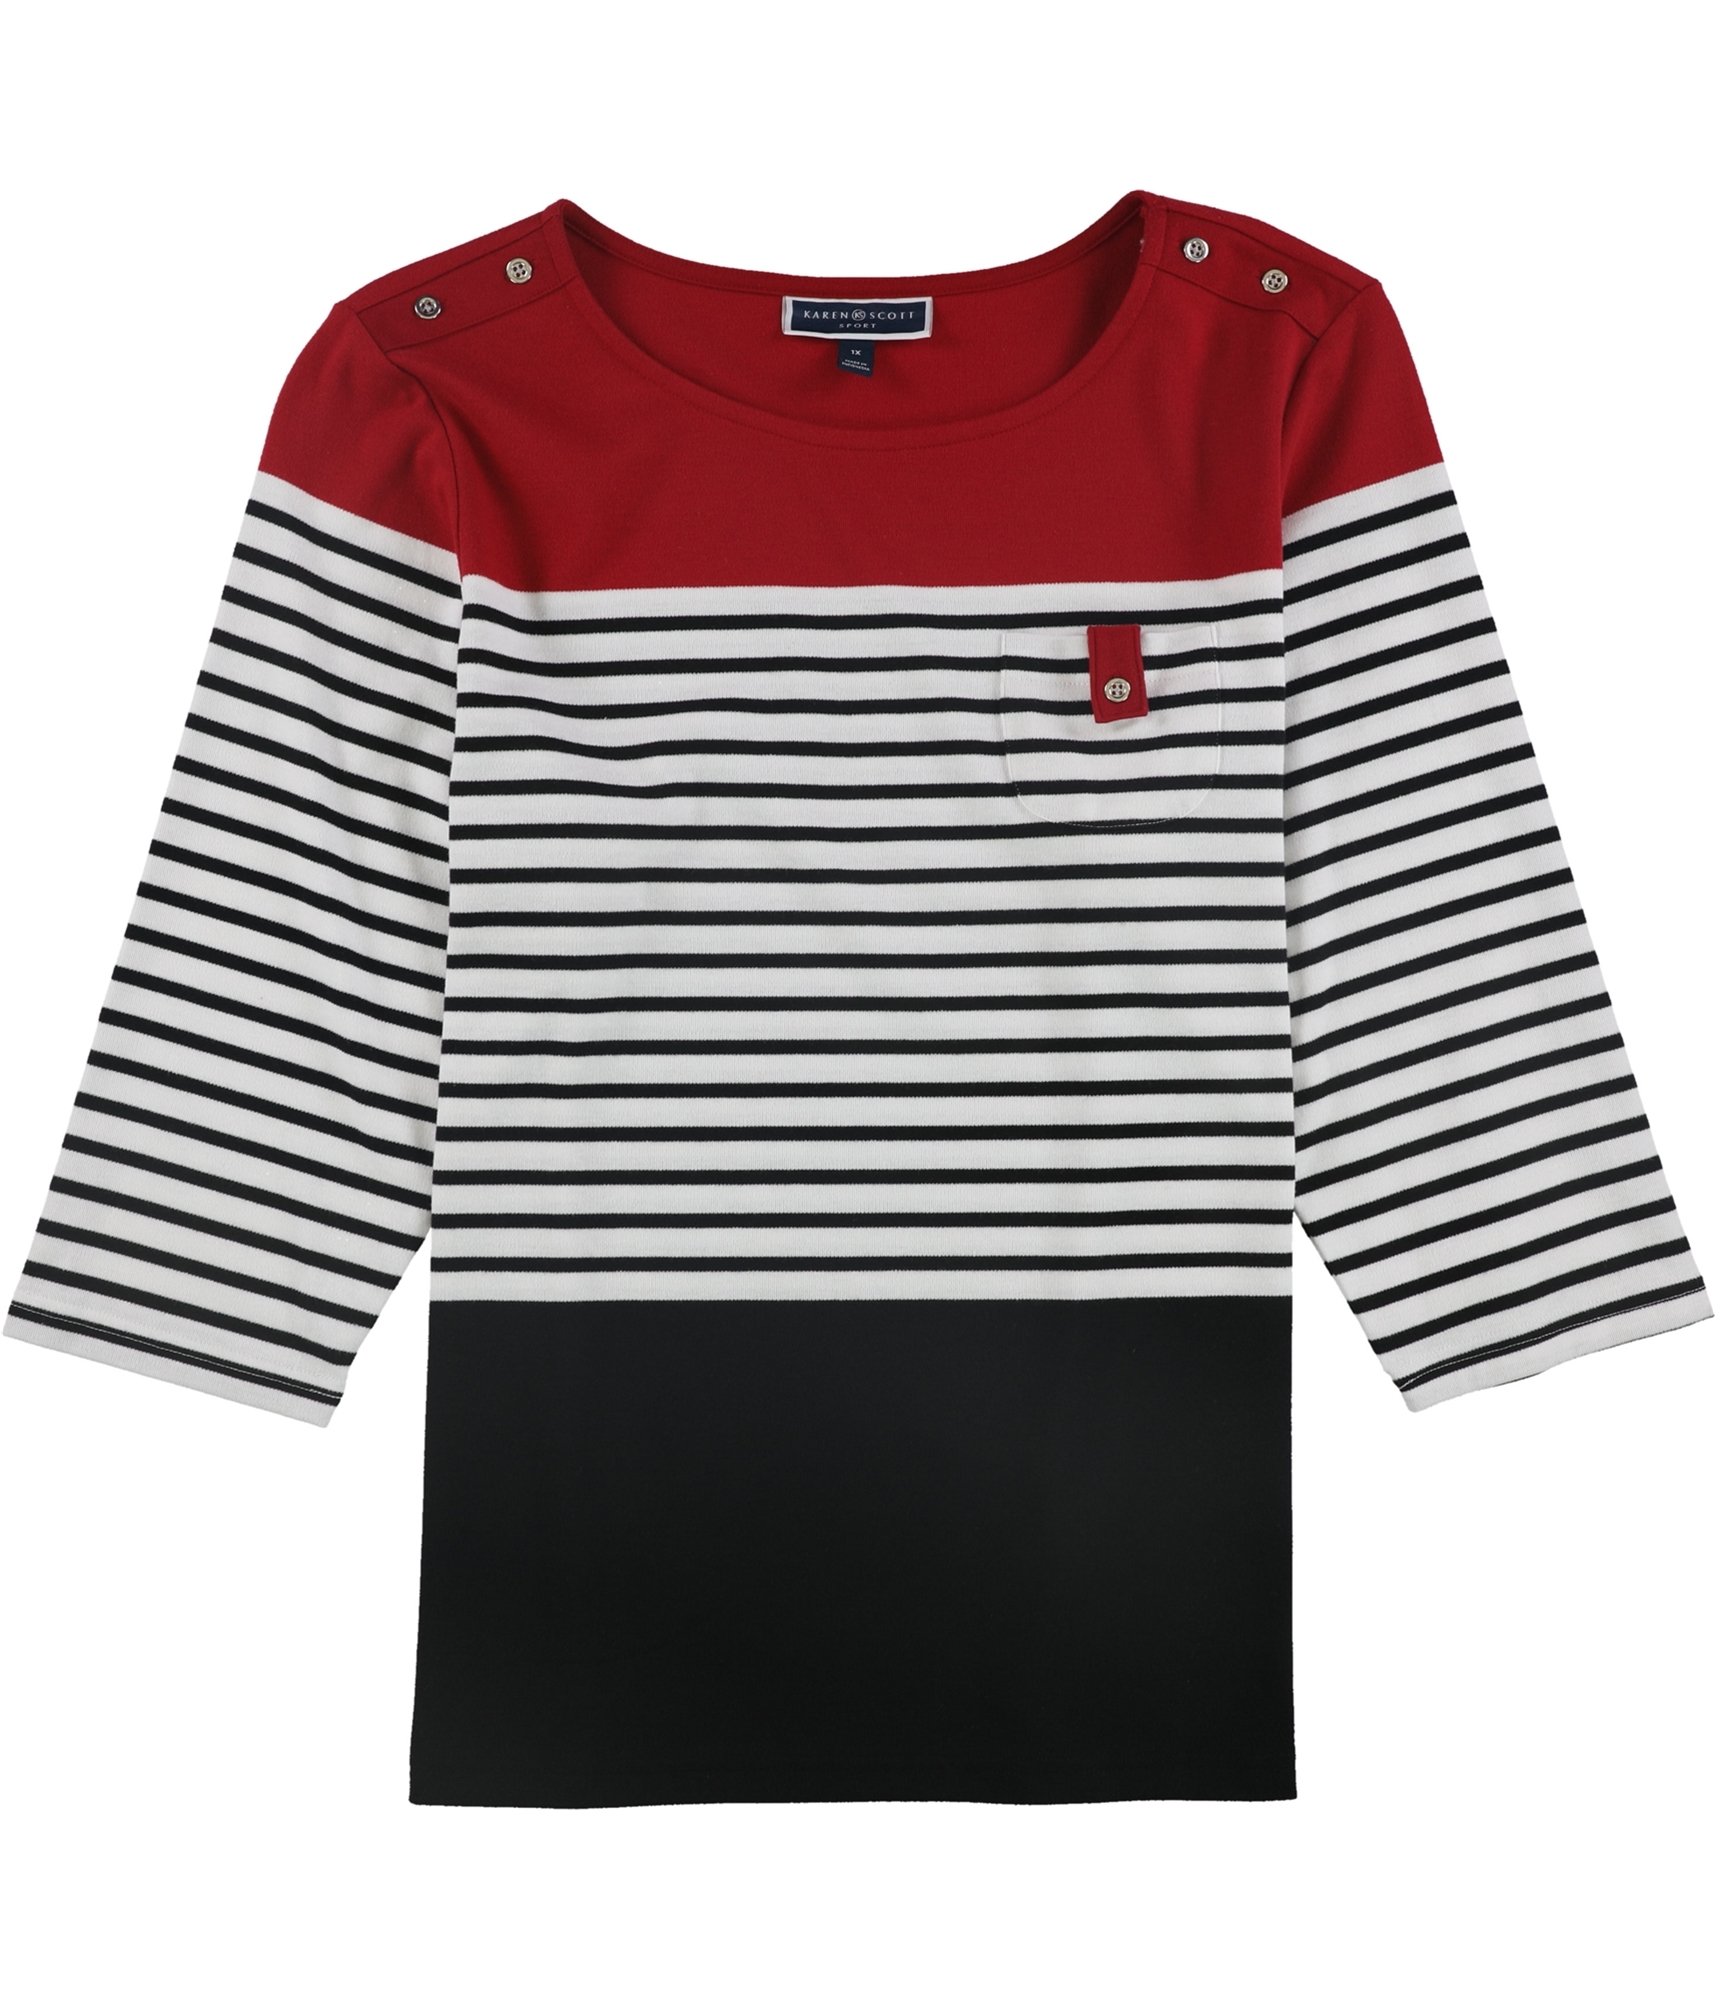 Buy a Karen Scott Womens Striped Pullover Blouse, TW3